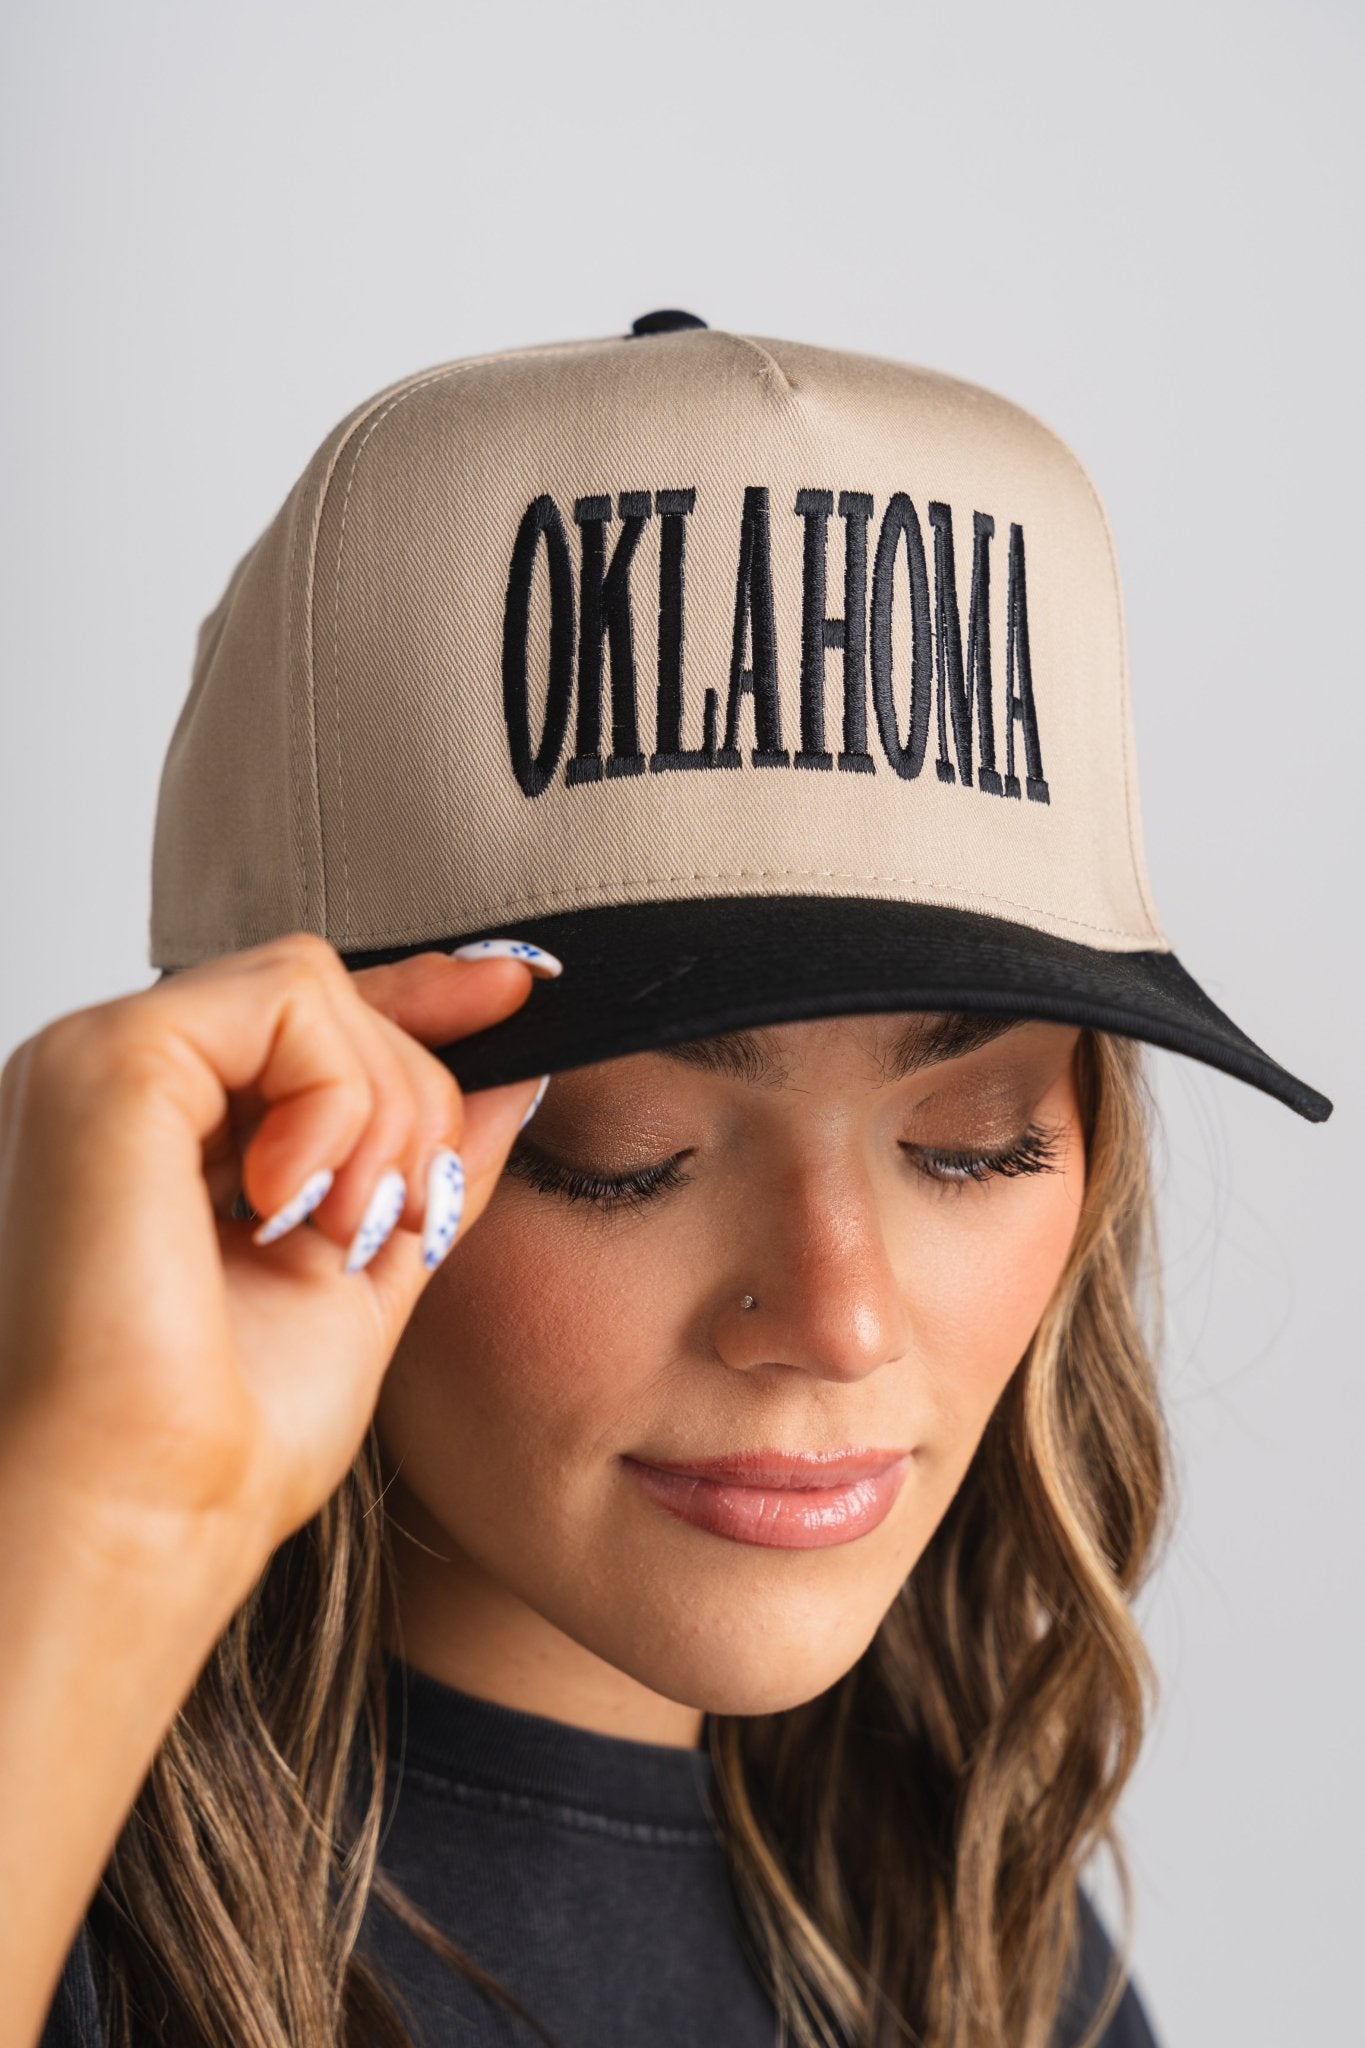 Oklahoma vintage hat black/khaki - Trendy Hats at Lush Fashion Lounge Boutique in Oklahoma City